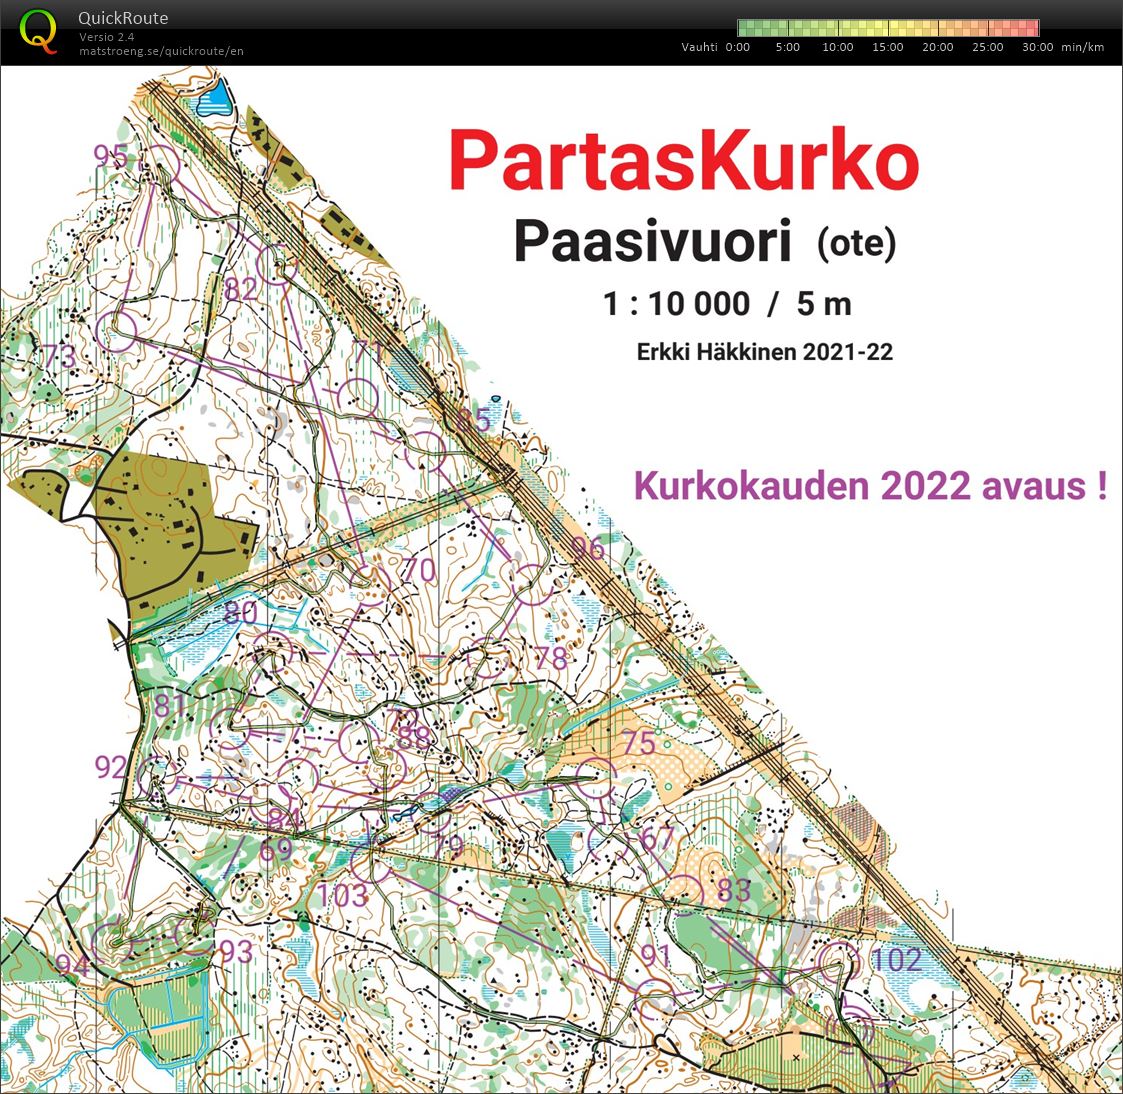 PartasKurko (29-09-2022)